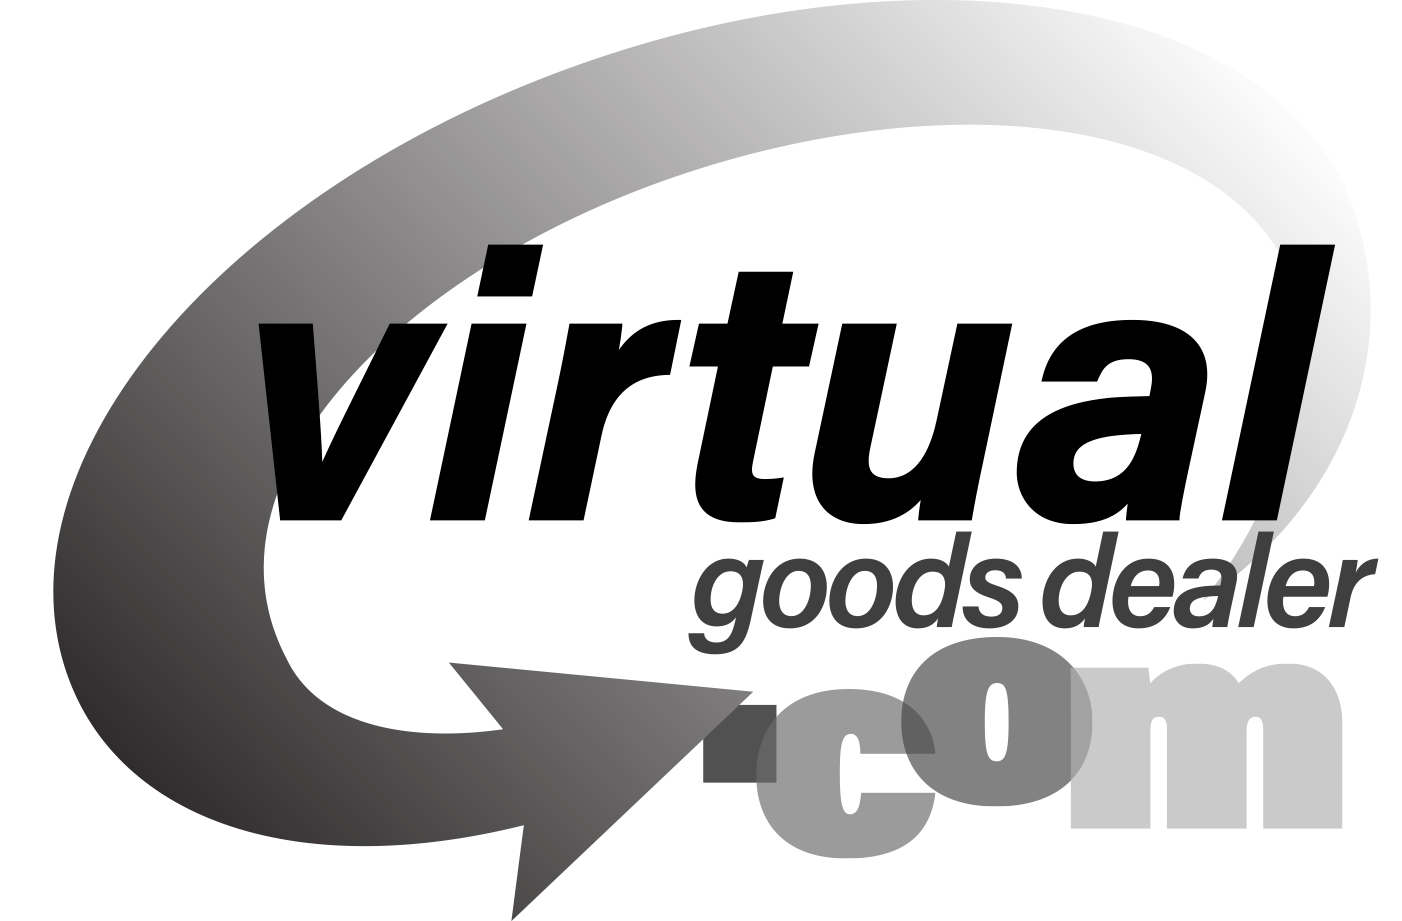 virtualgoodsdealer logo